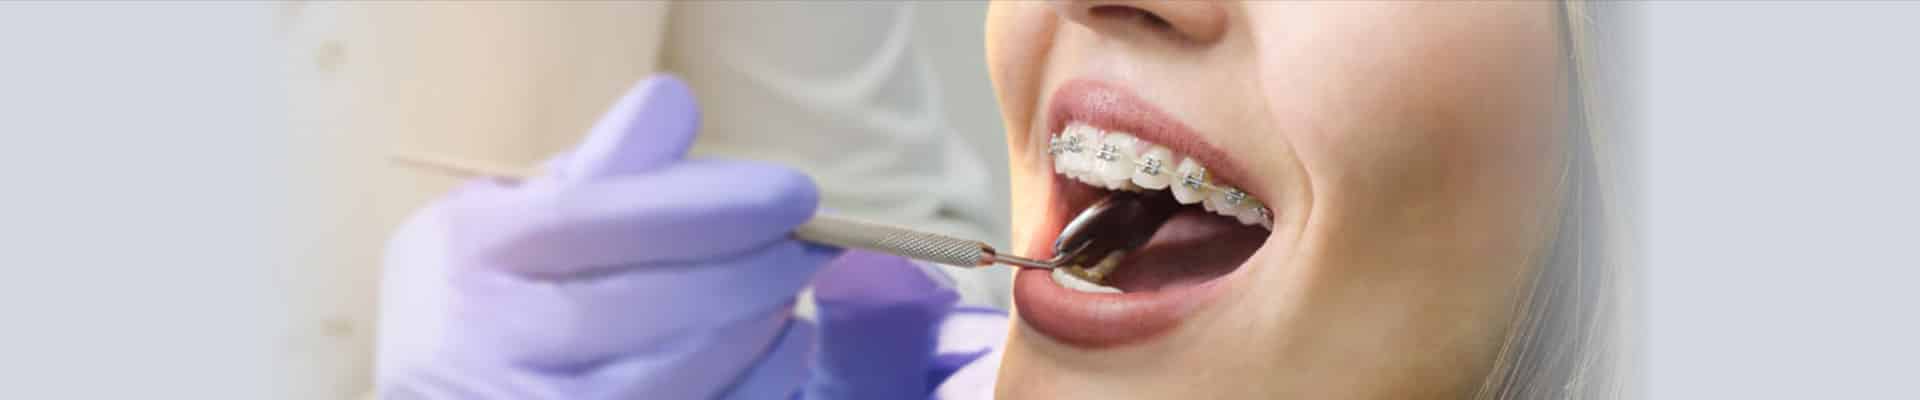 medicare dentists perth